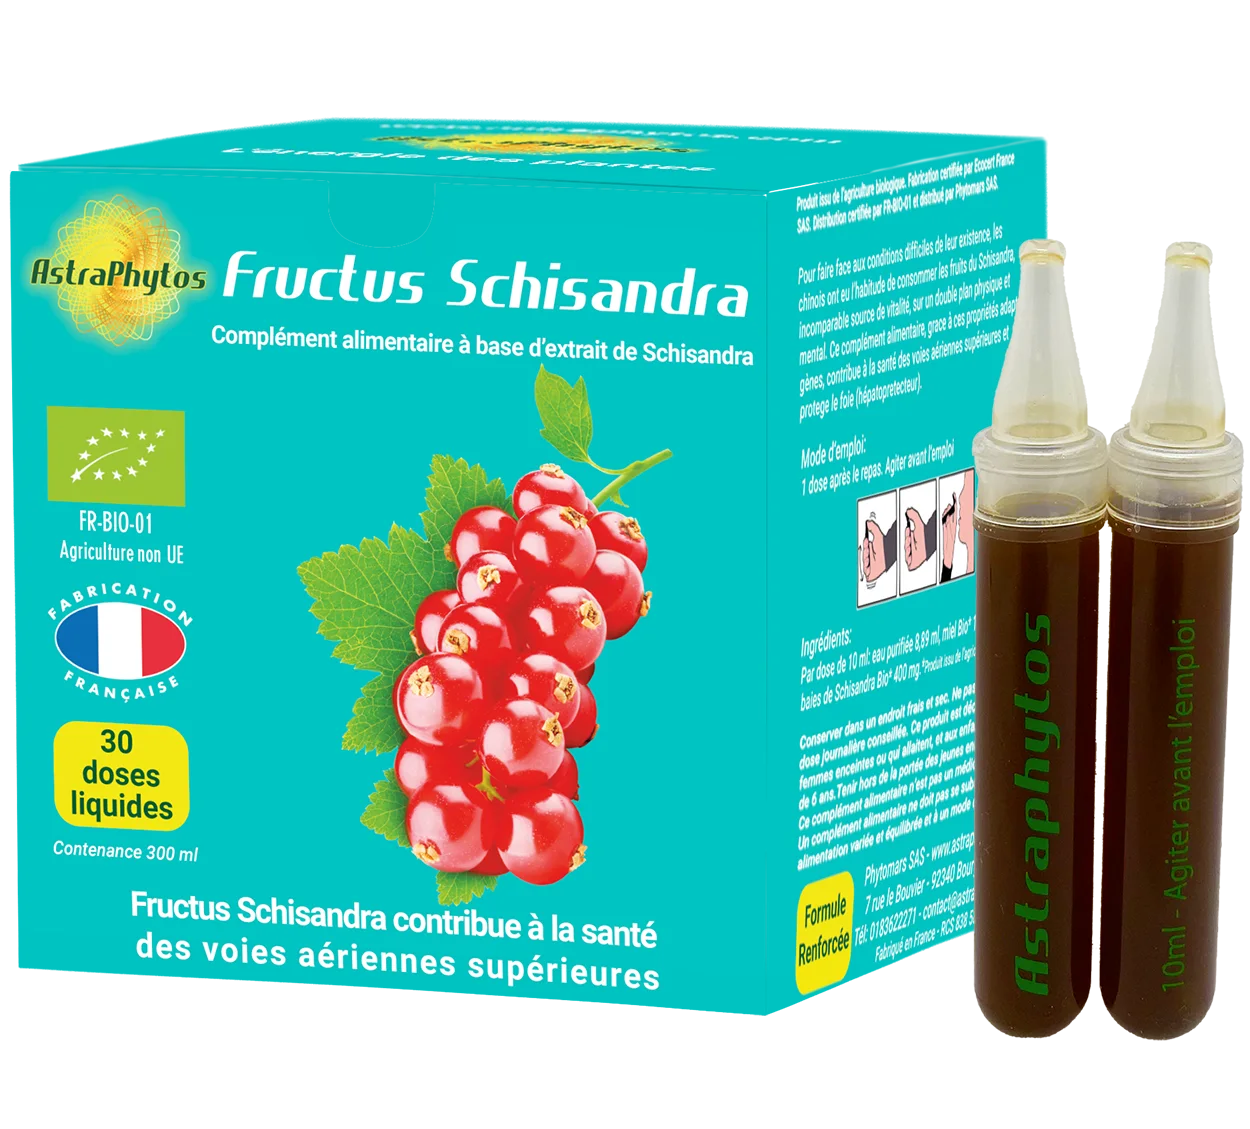 Nouvelle-boite-Fructus-Schisandra-Bio-boite-ampoules-doses-liquides-Astraphytos-Phytomars